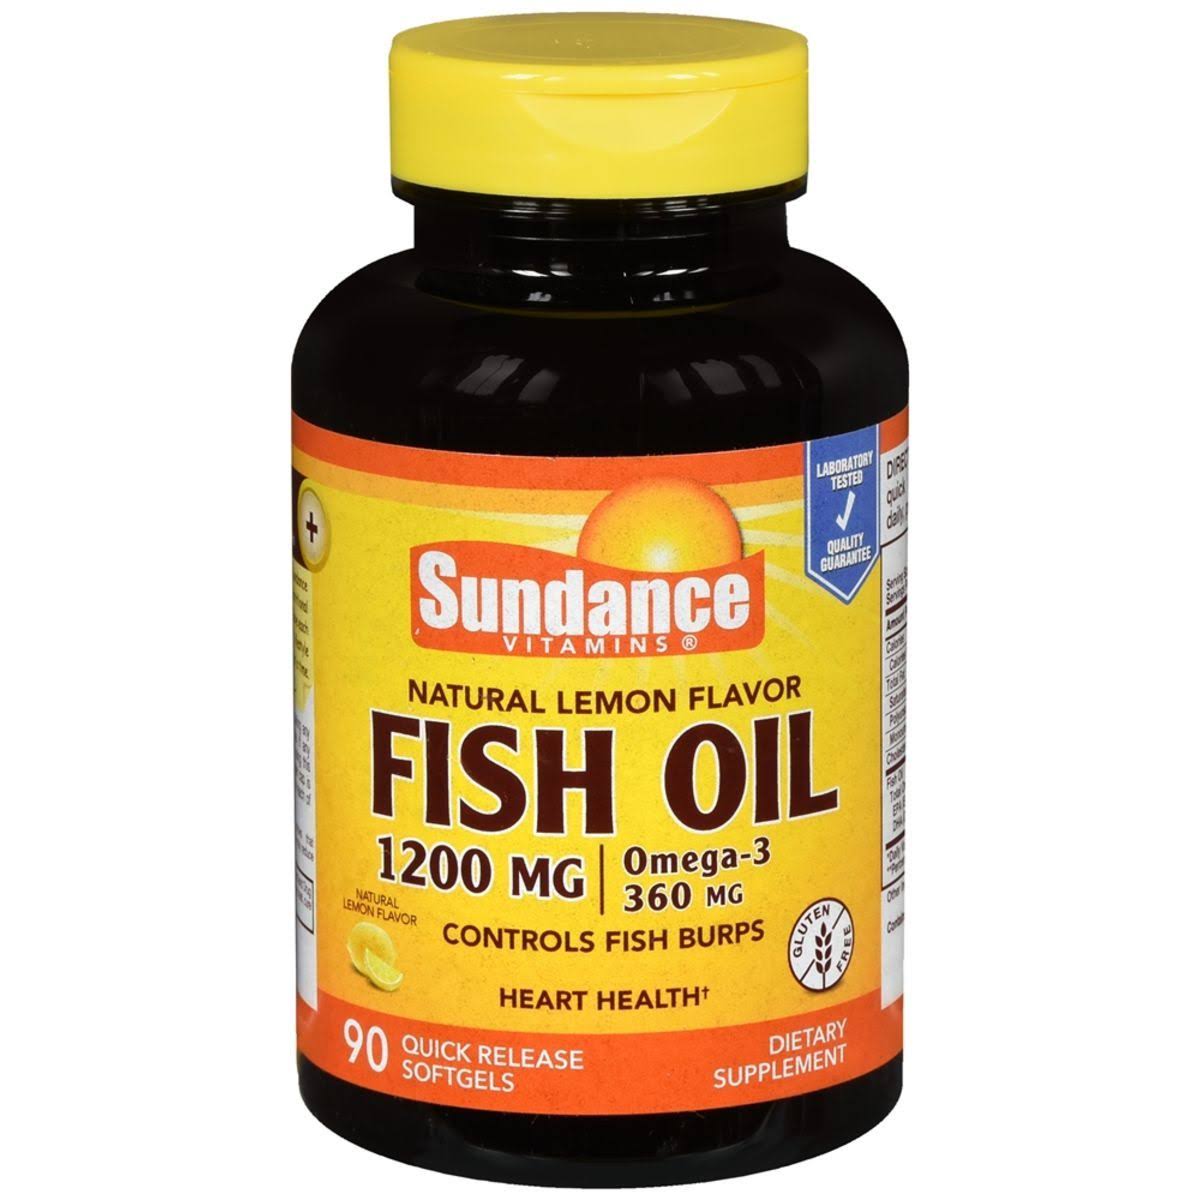 Sundance Vitamins Fish Oil Supplement - 1200mg, Omega-3 360mg, Natural Lemon Flavor, 90 Softgels